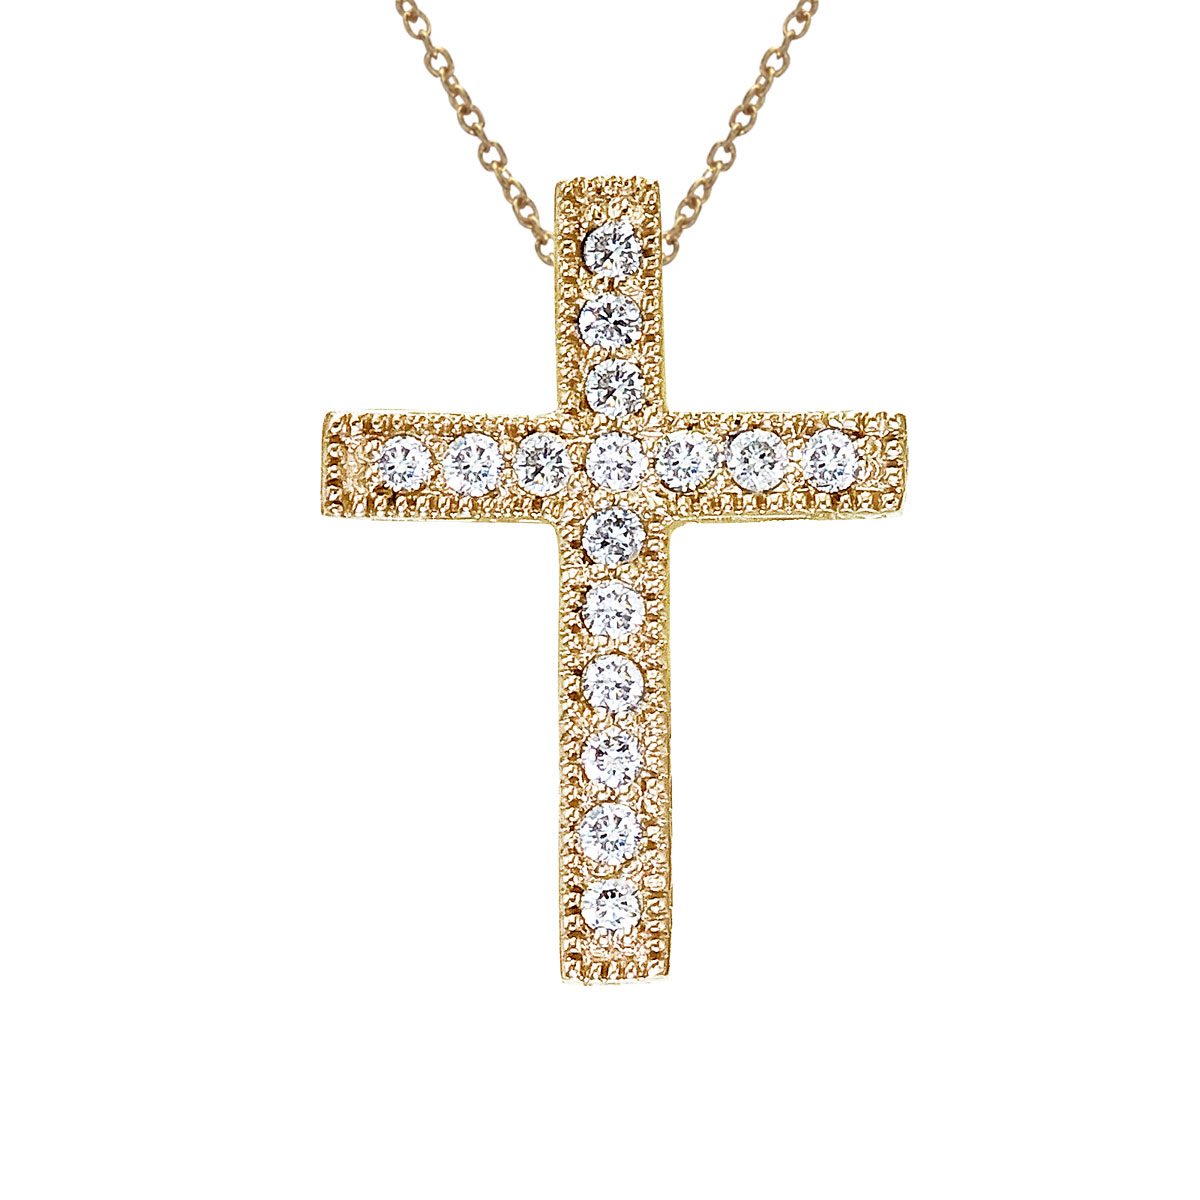 .16 ct diamond cross pendant set in 14k yellow gold.